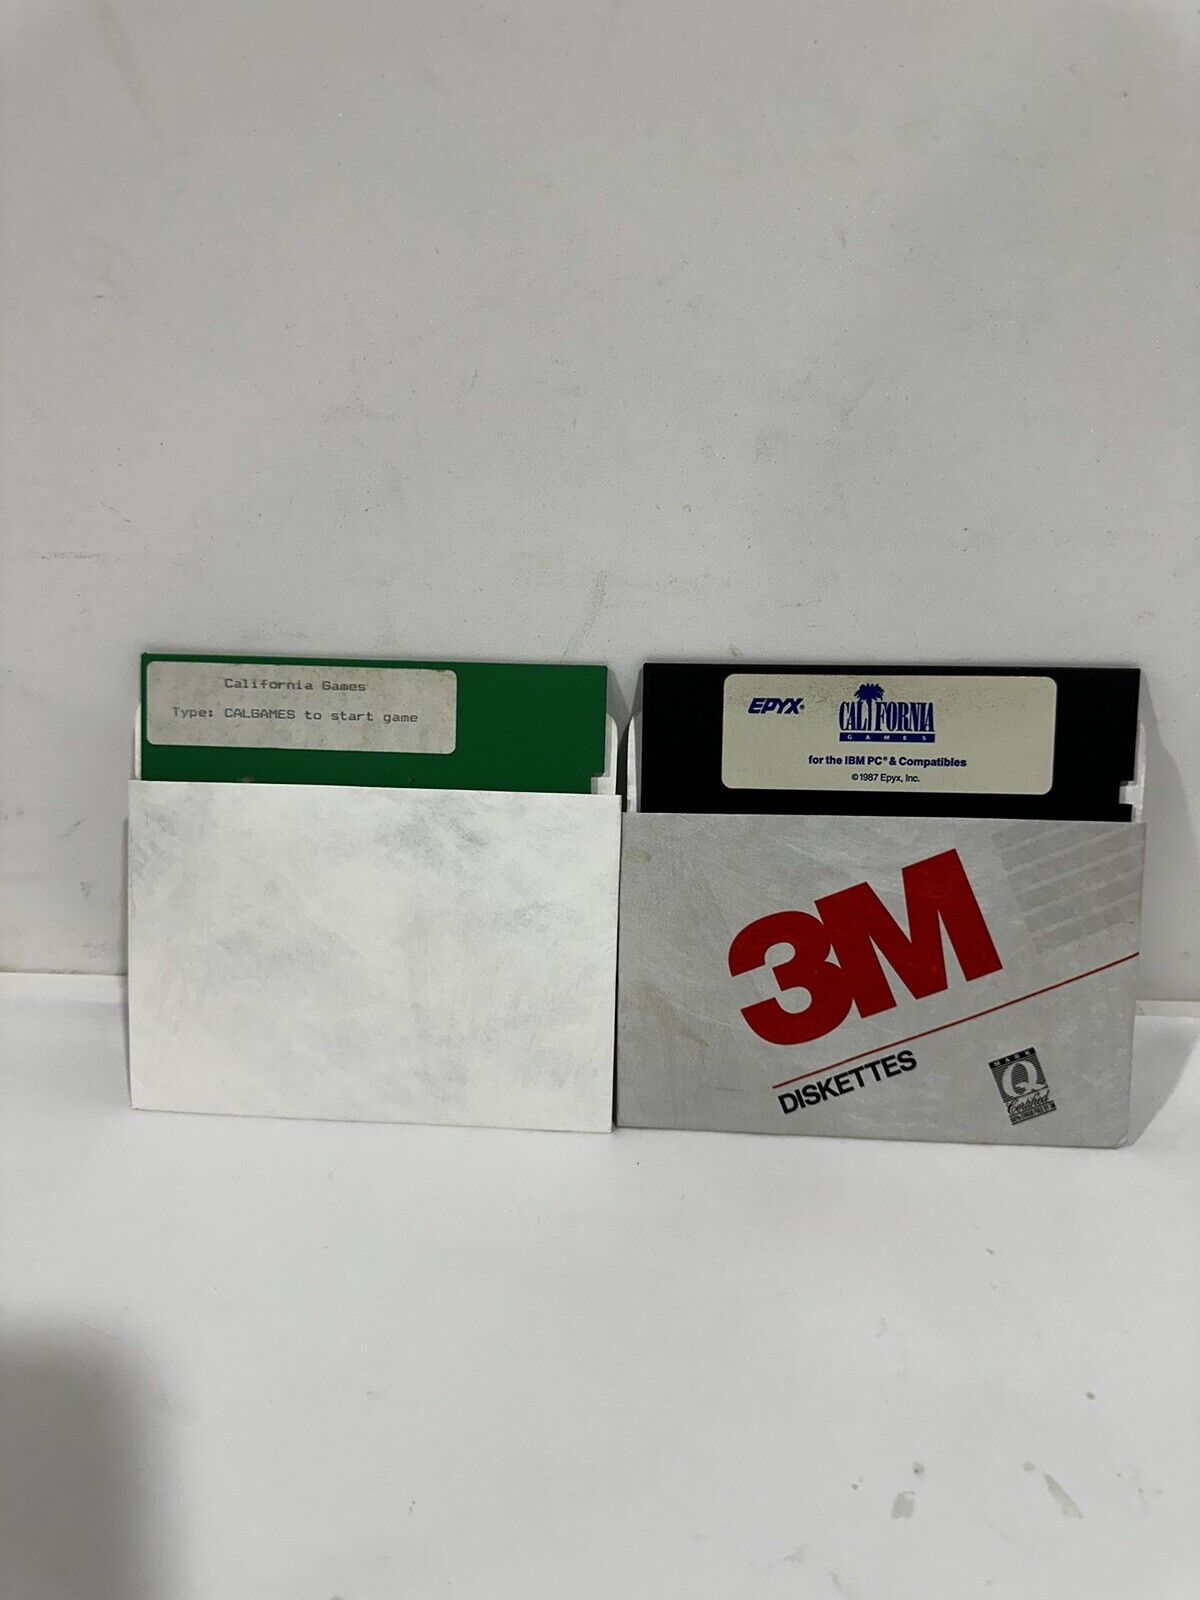 Lot of 2 California Games by Epyx, vintage Apple II 5.25 disk